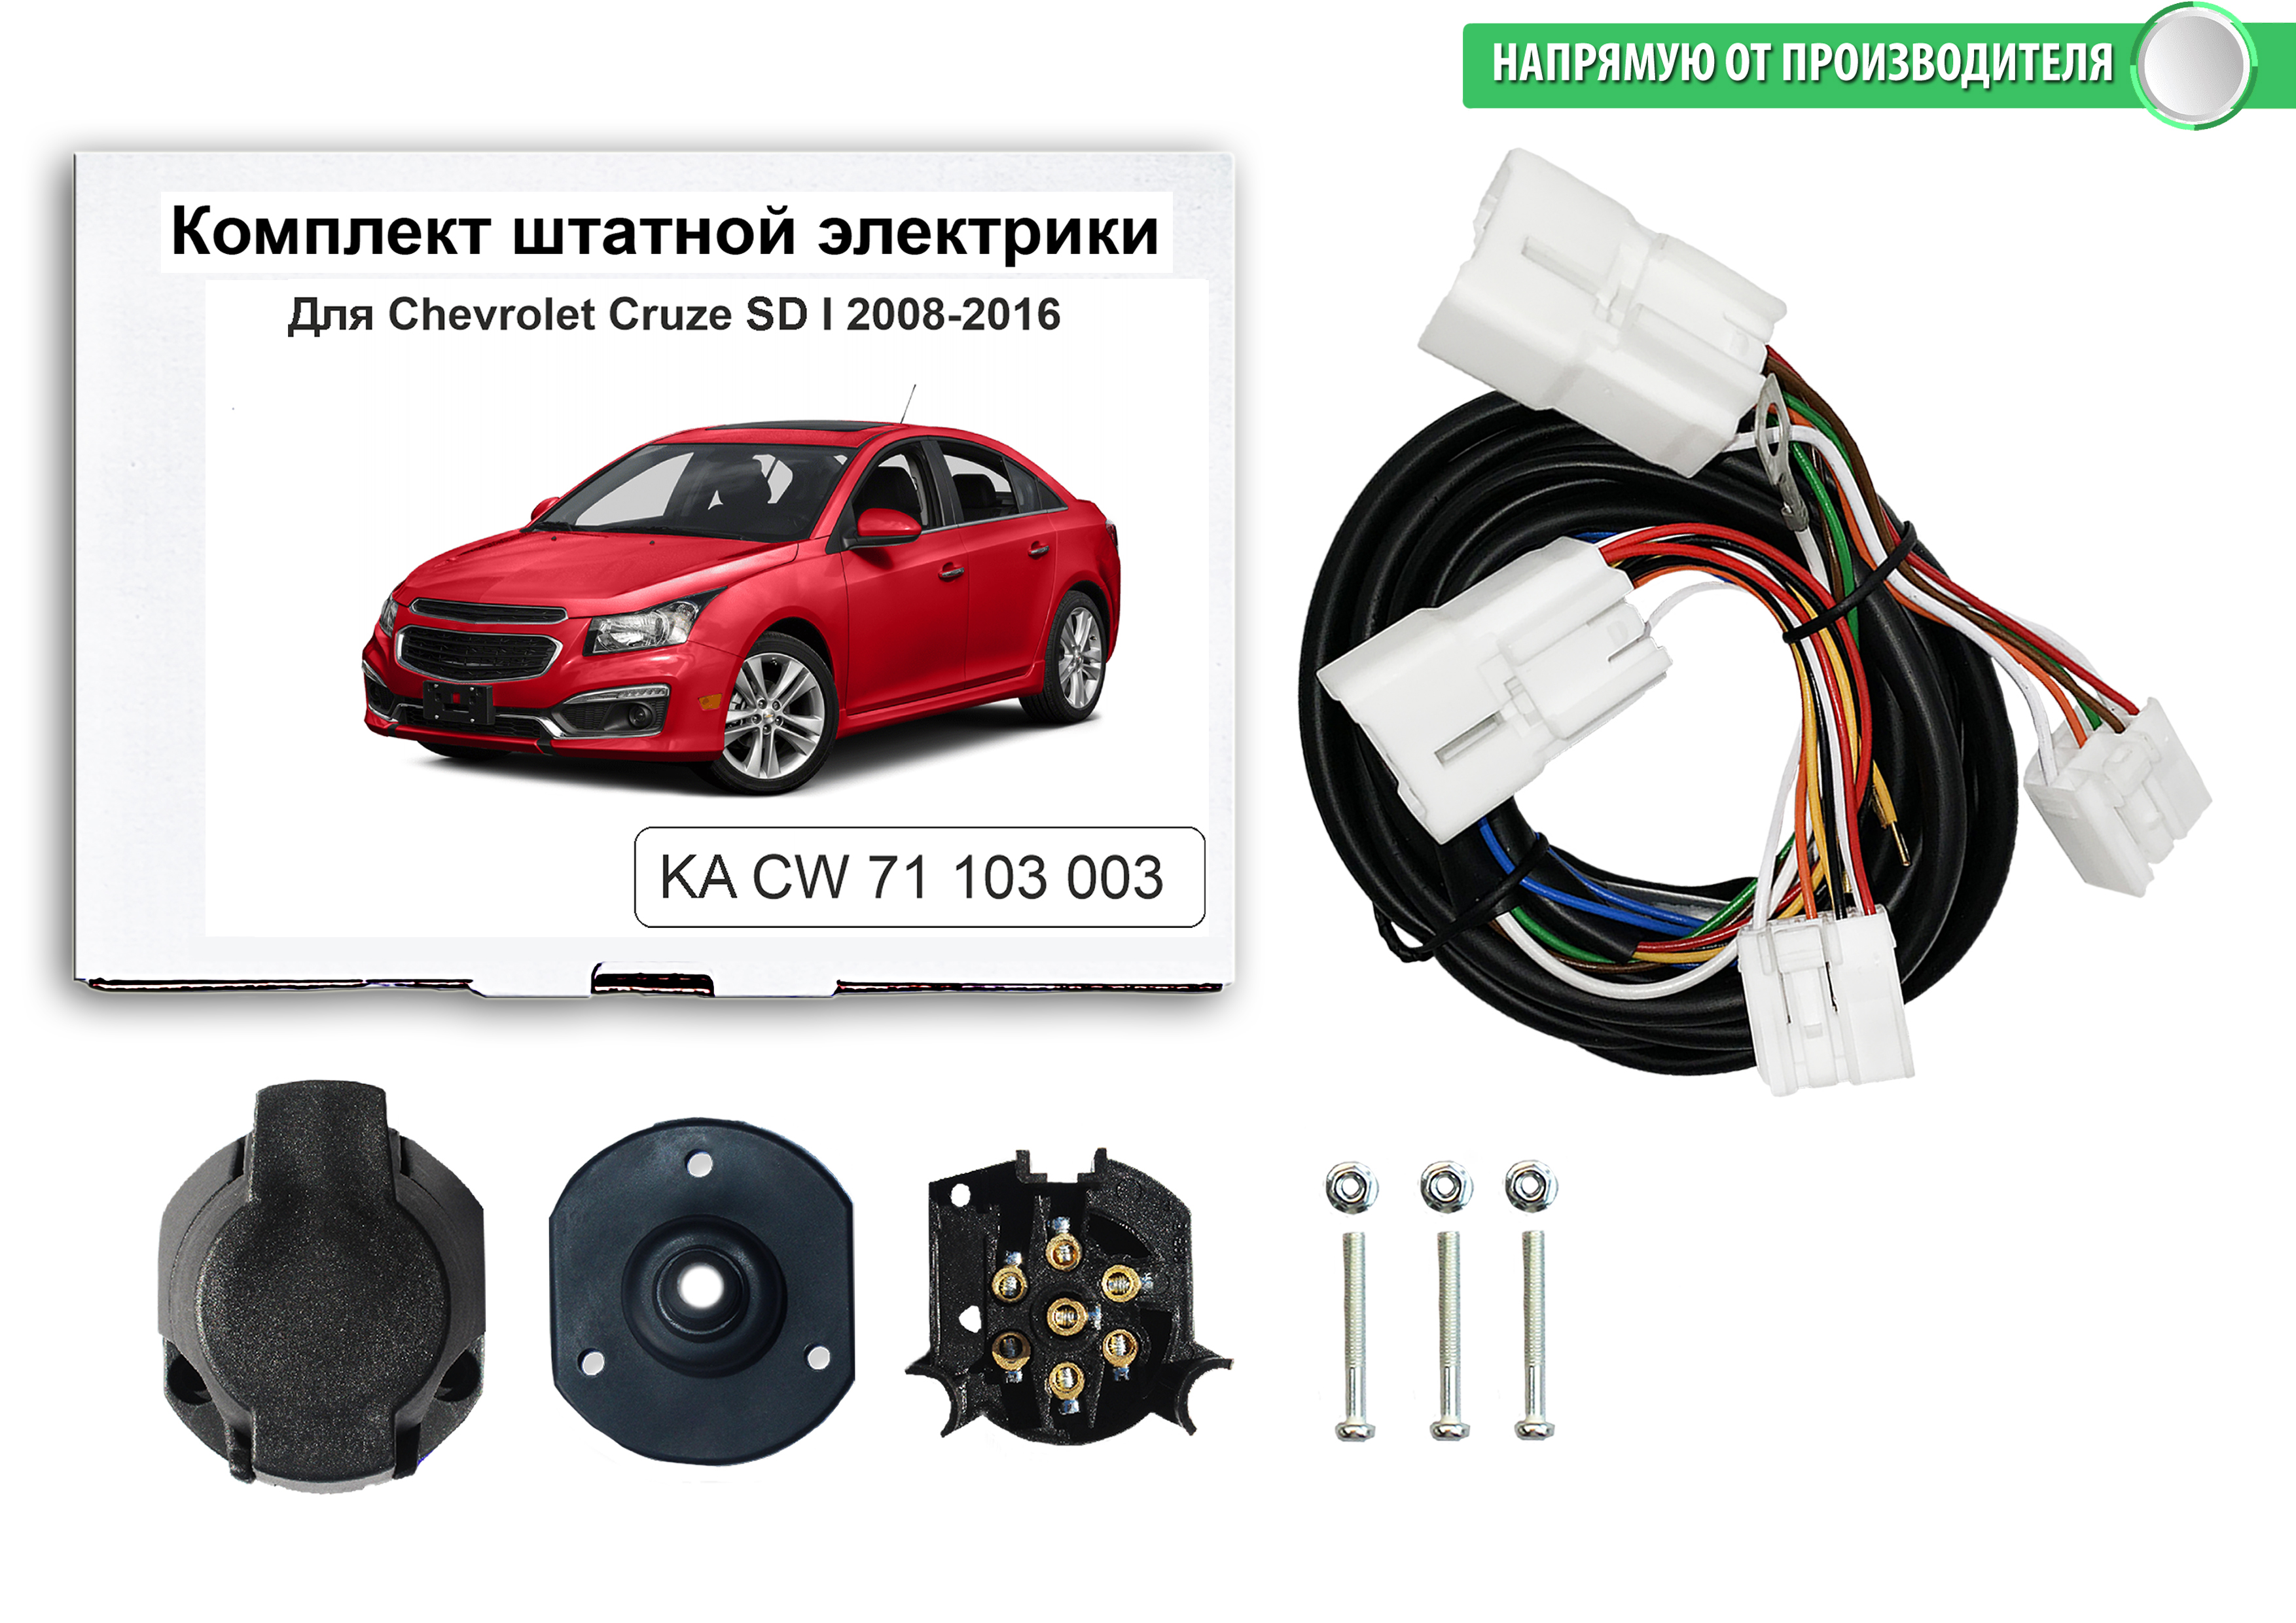 Комплект электрики КонцептАвто для фаркопа Chevrolet Cruze SD 2008-16 гг,1шт